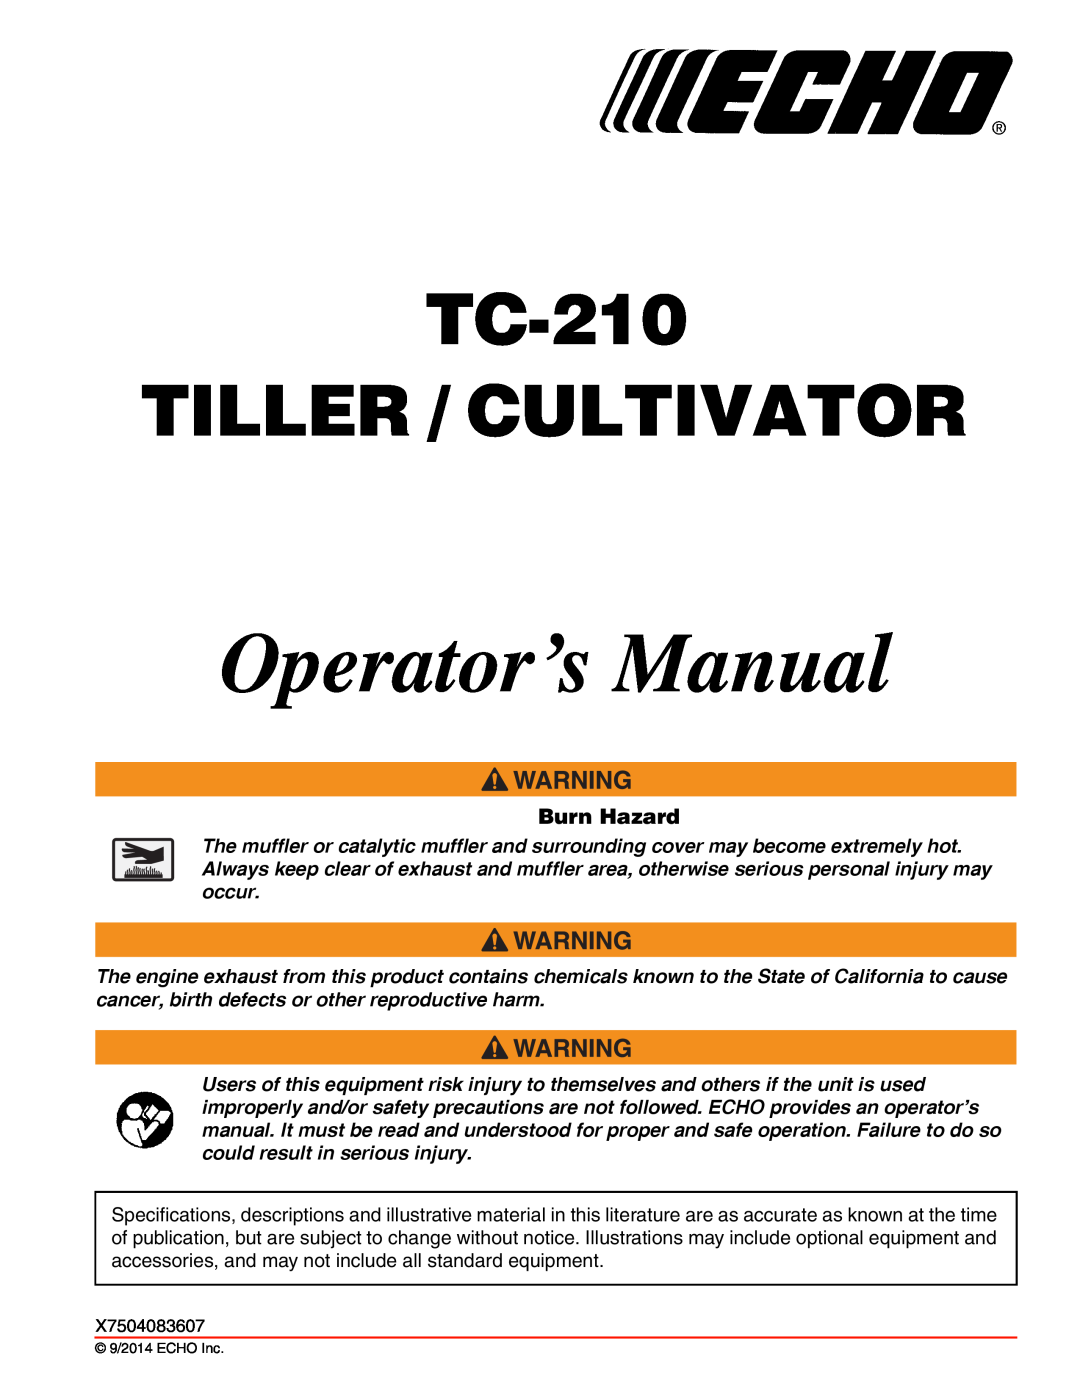 Echo specifications Burn Hazard, Operator’s Manual, TC-210 TILLER / CULTIVATOR 